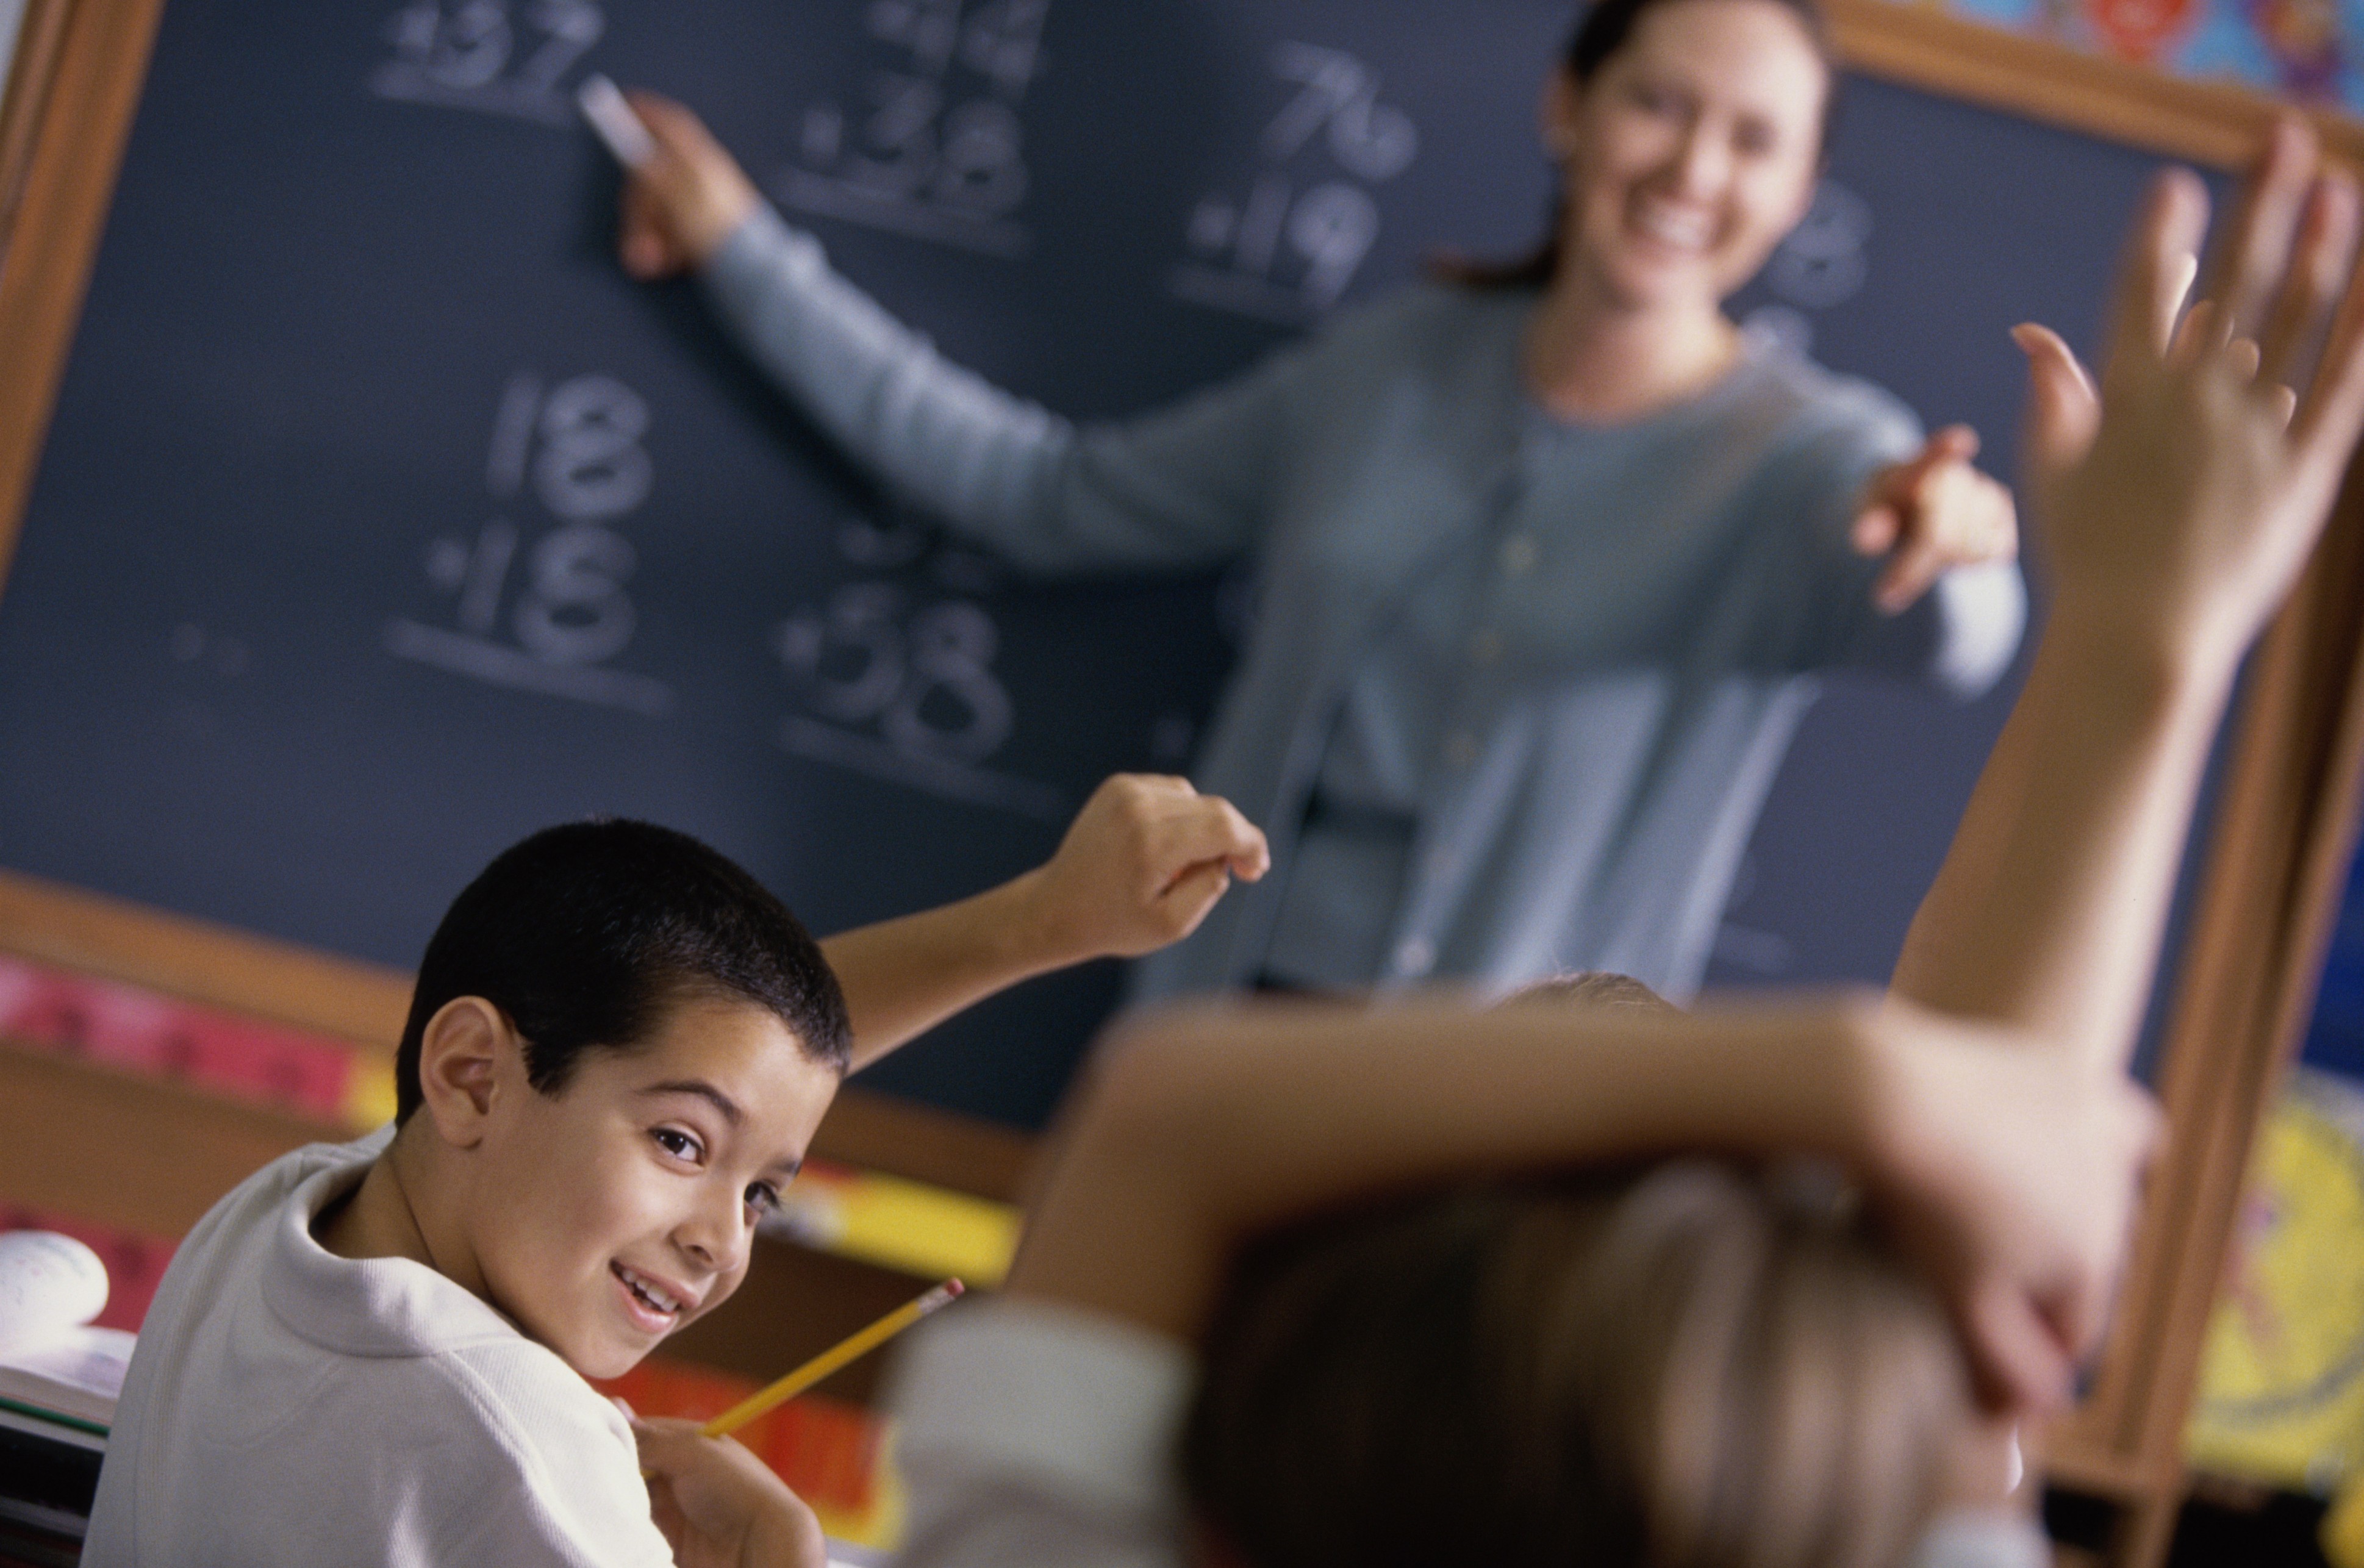 Professor ensina os alunos na escola (Foto: Thinkstock)